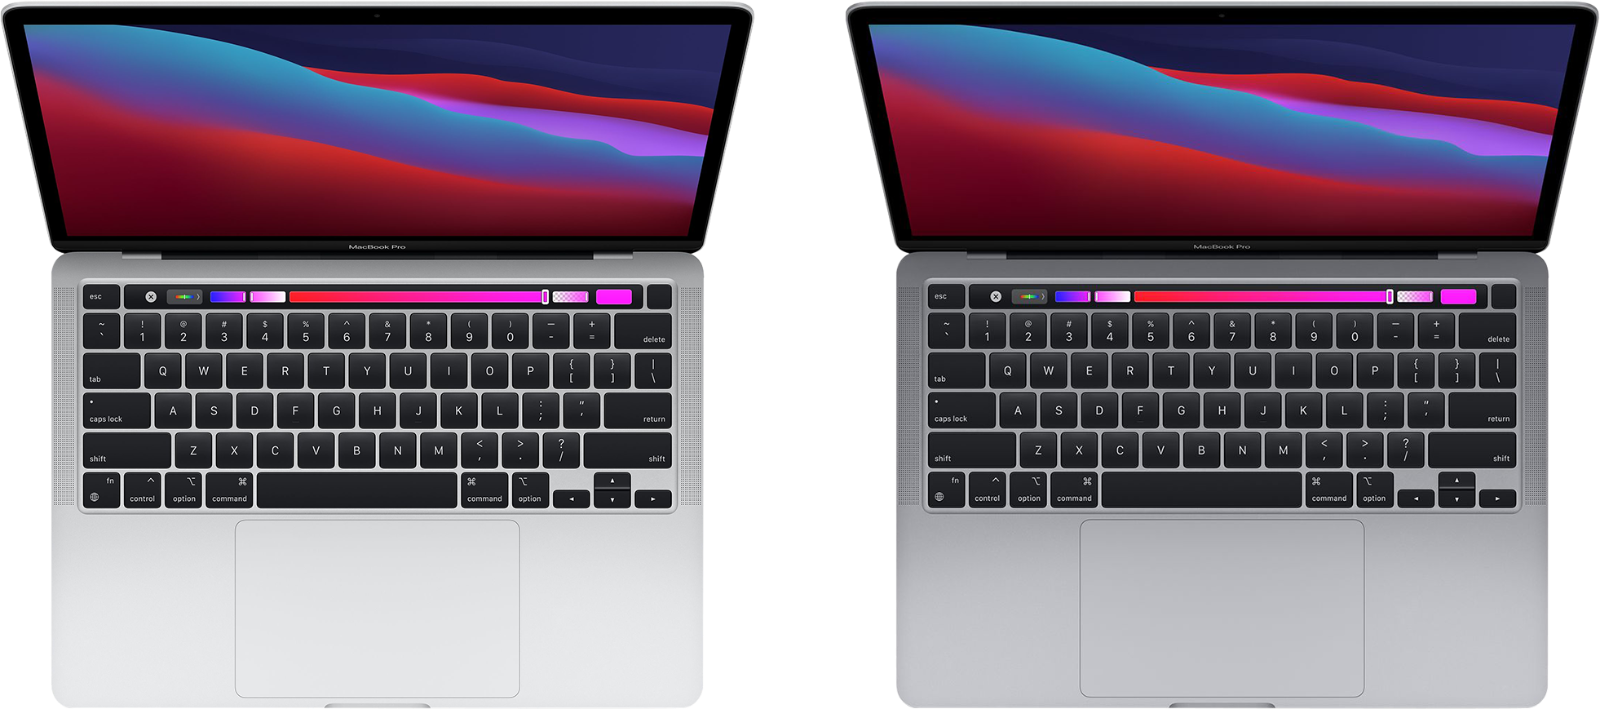 apple macbook pro 13 inch specifications